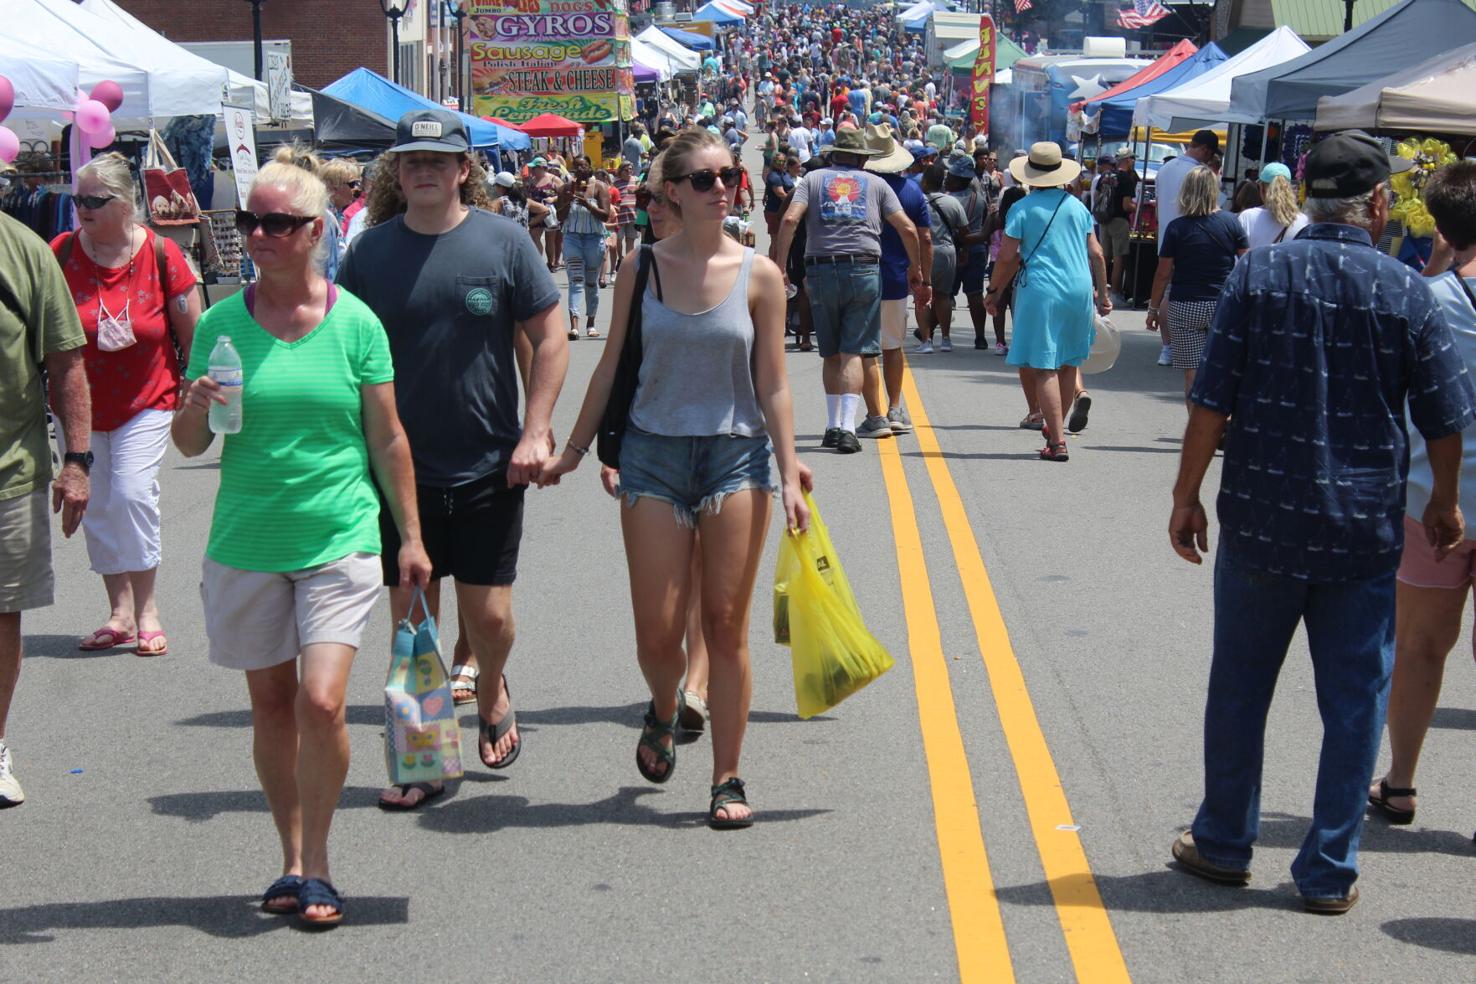 PHOTOS Thousands enjoy Lakefest in Clarksville Local News